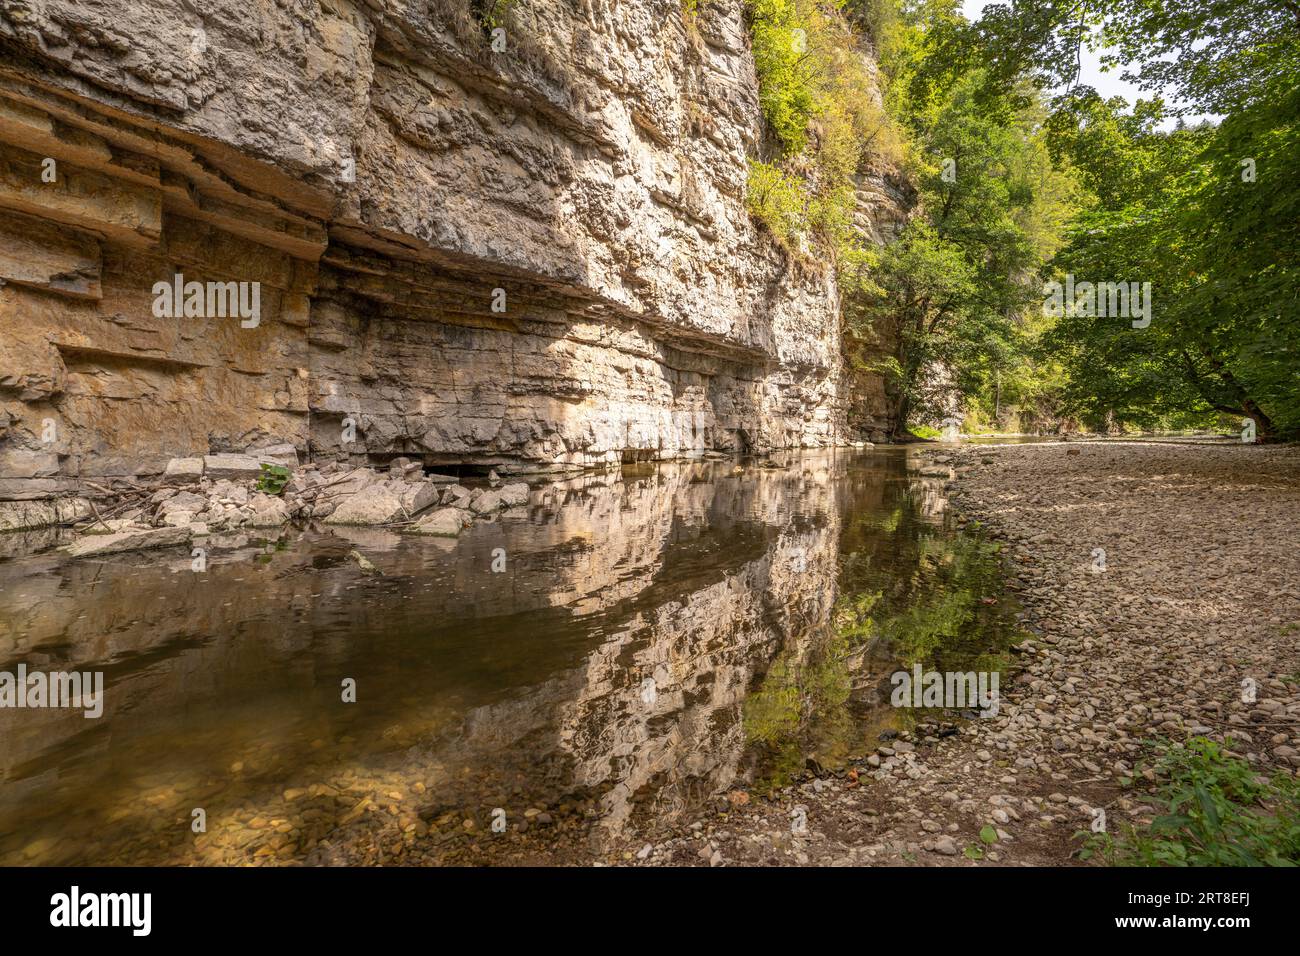 Felswand und der Fluss Wutach in der Wutachschlucht, Schwarzwald, Baden-Württemberg, Deutschland | muro di roccia e fiume Wutach presso la Gola di Wutach, BL Foto Stock